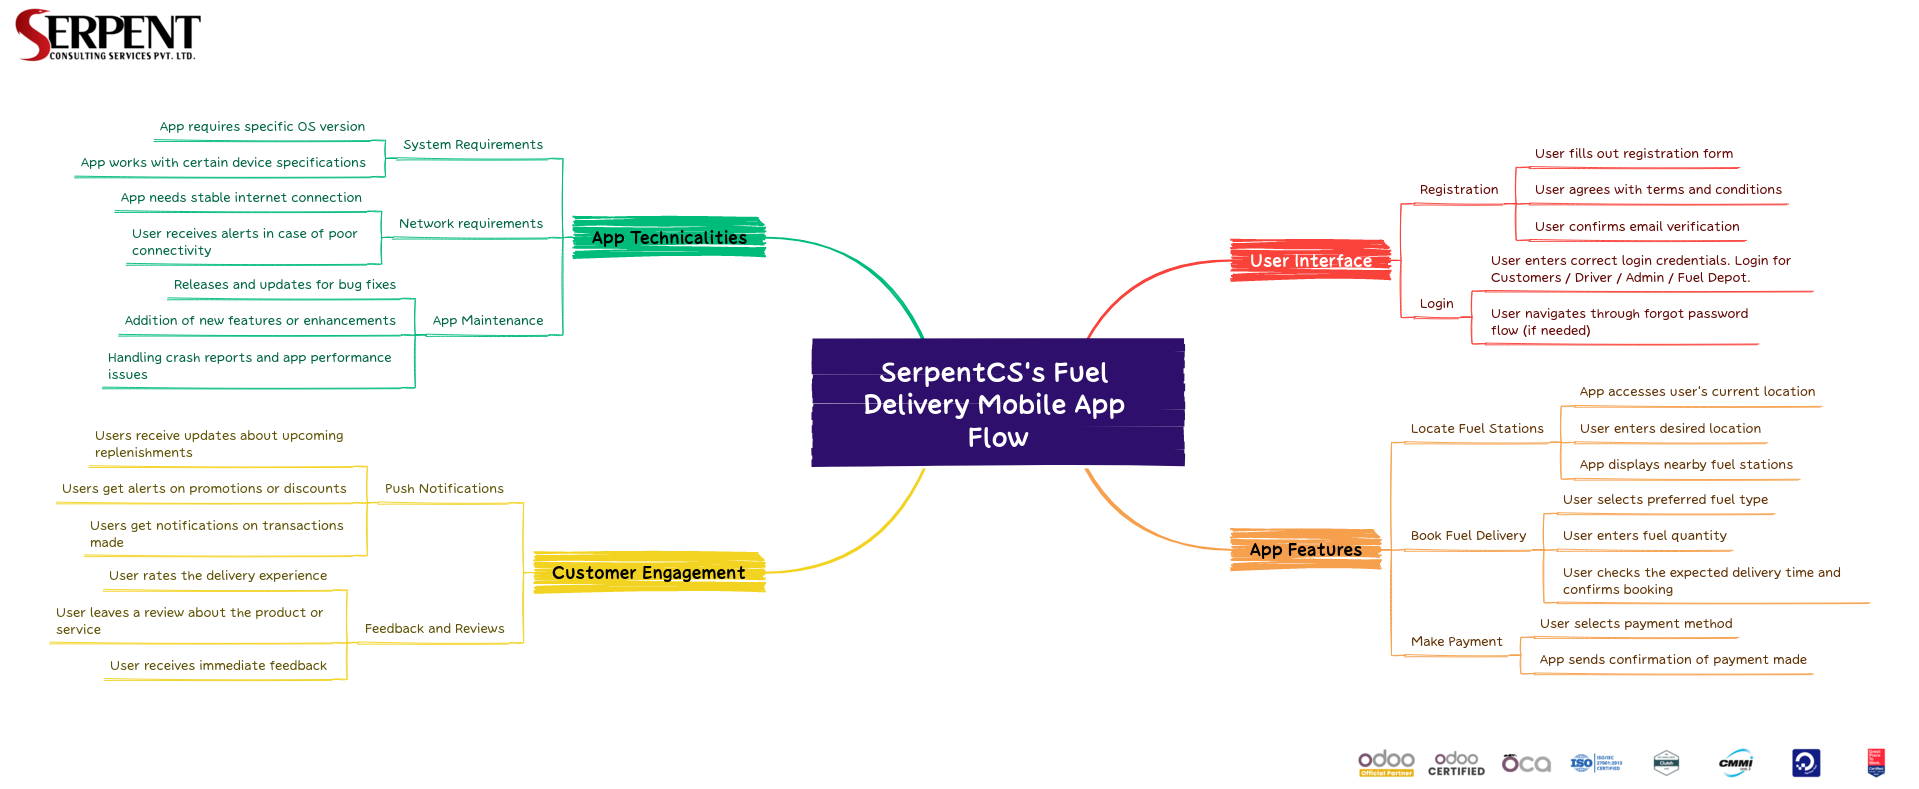 SerpentCS Fuel Delivery Mobile App FLow